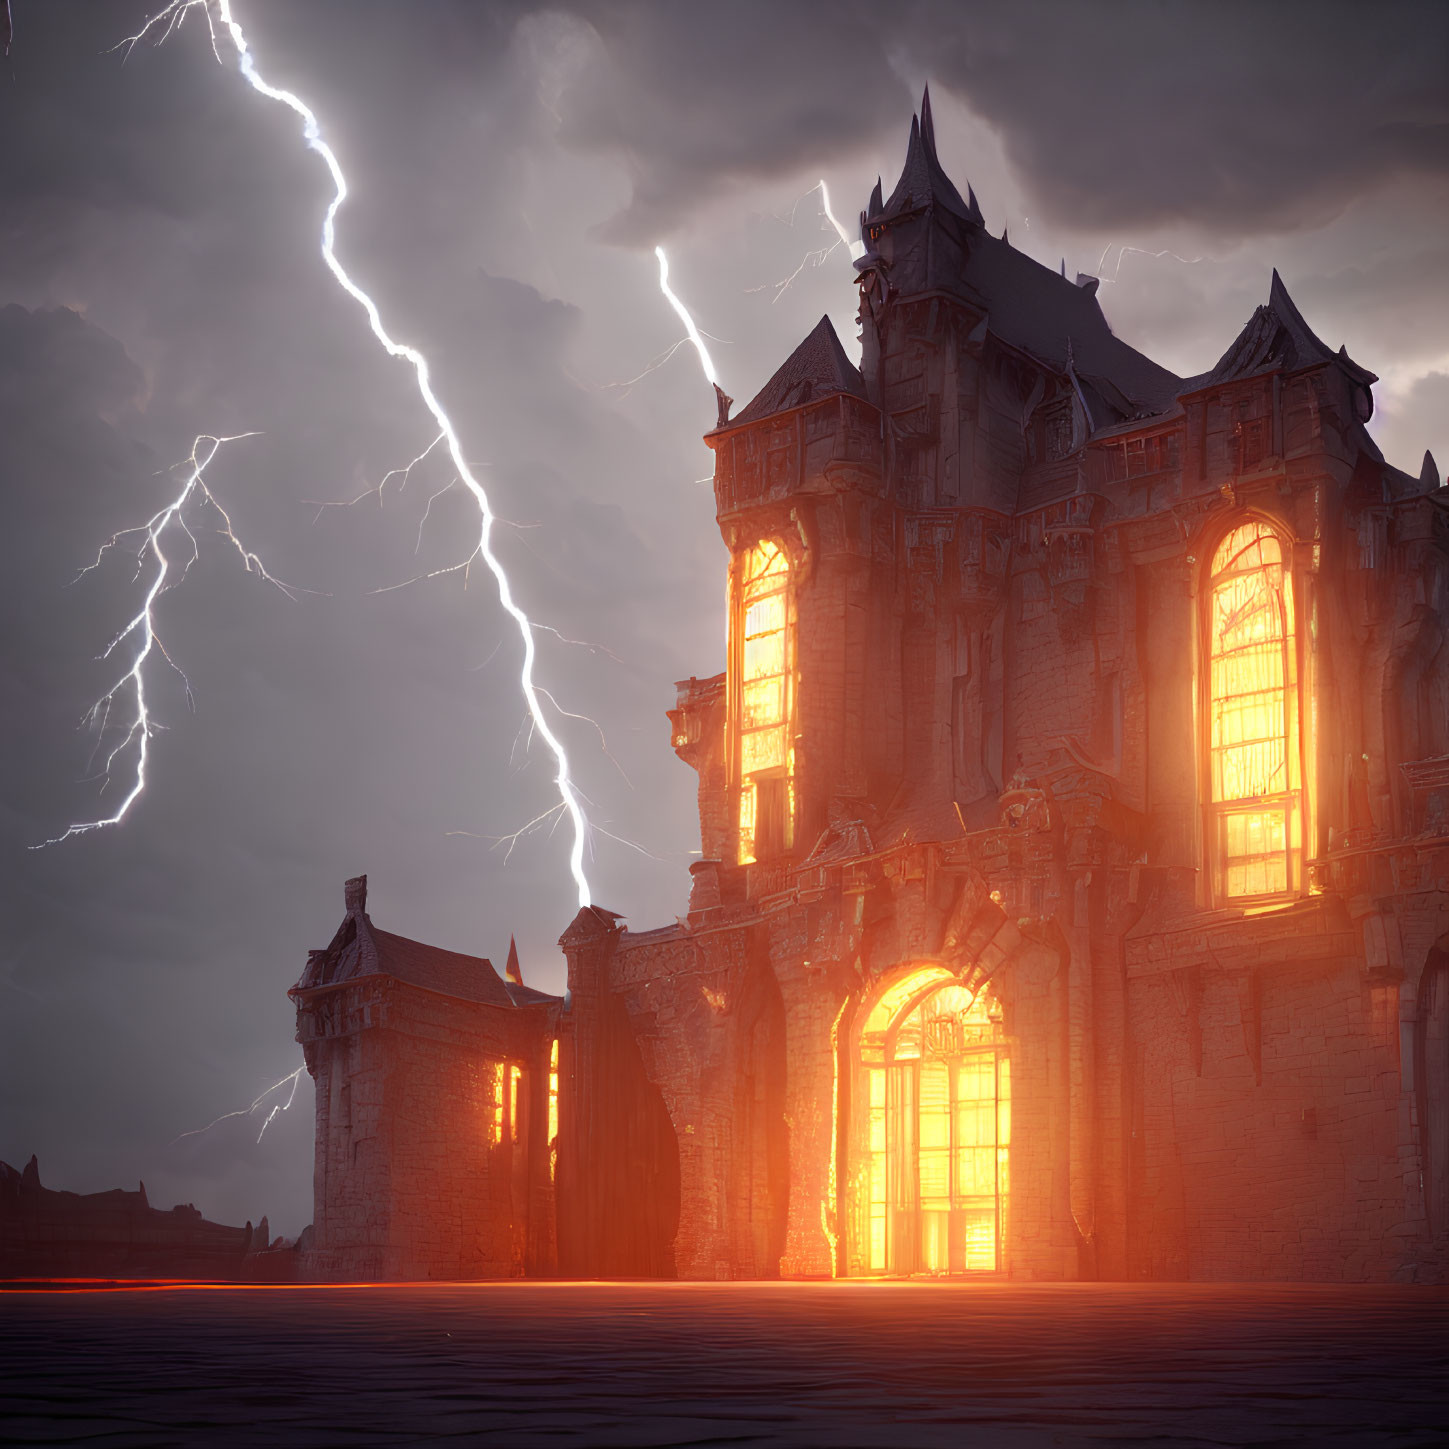 Gothic-style castle illuminated in stormy lightning.